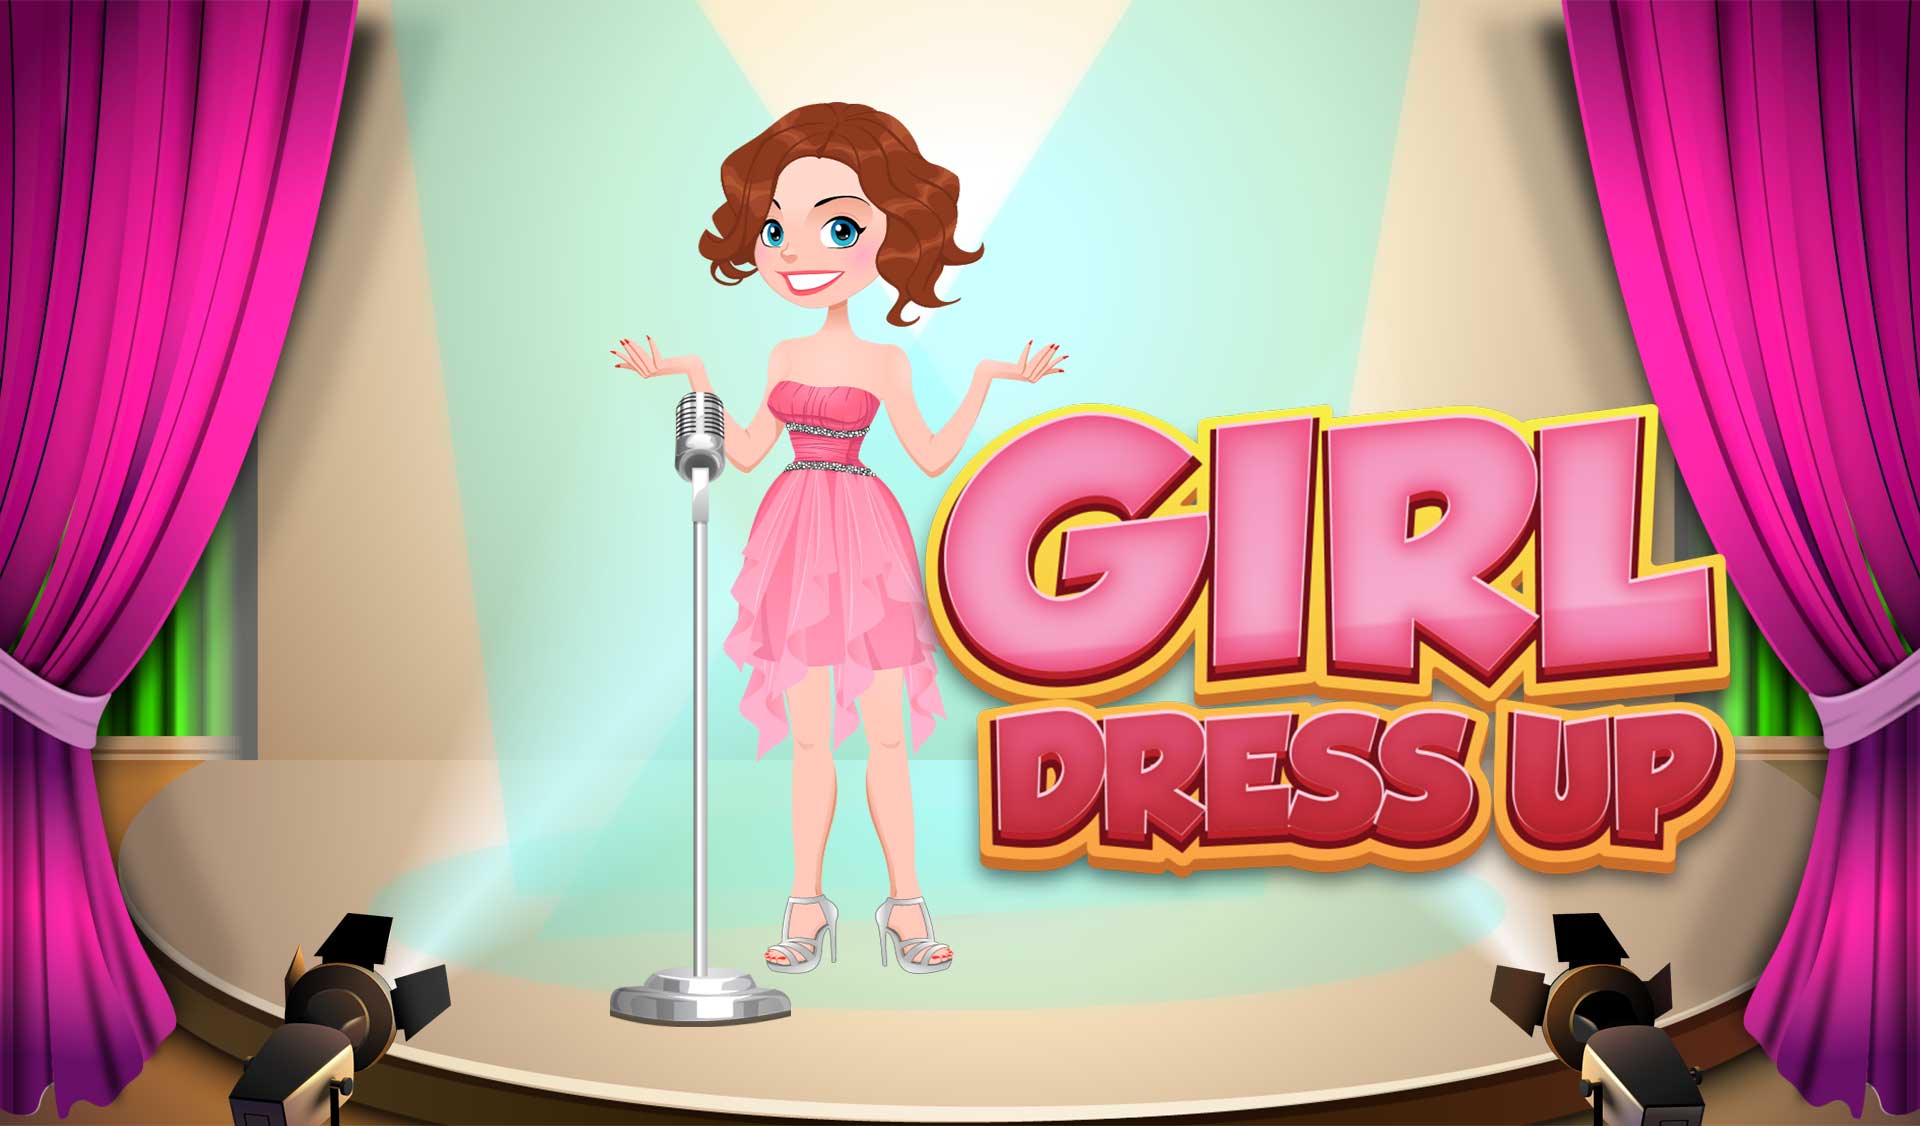 Girl Dress-Up Game - www.youplay.mobi